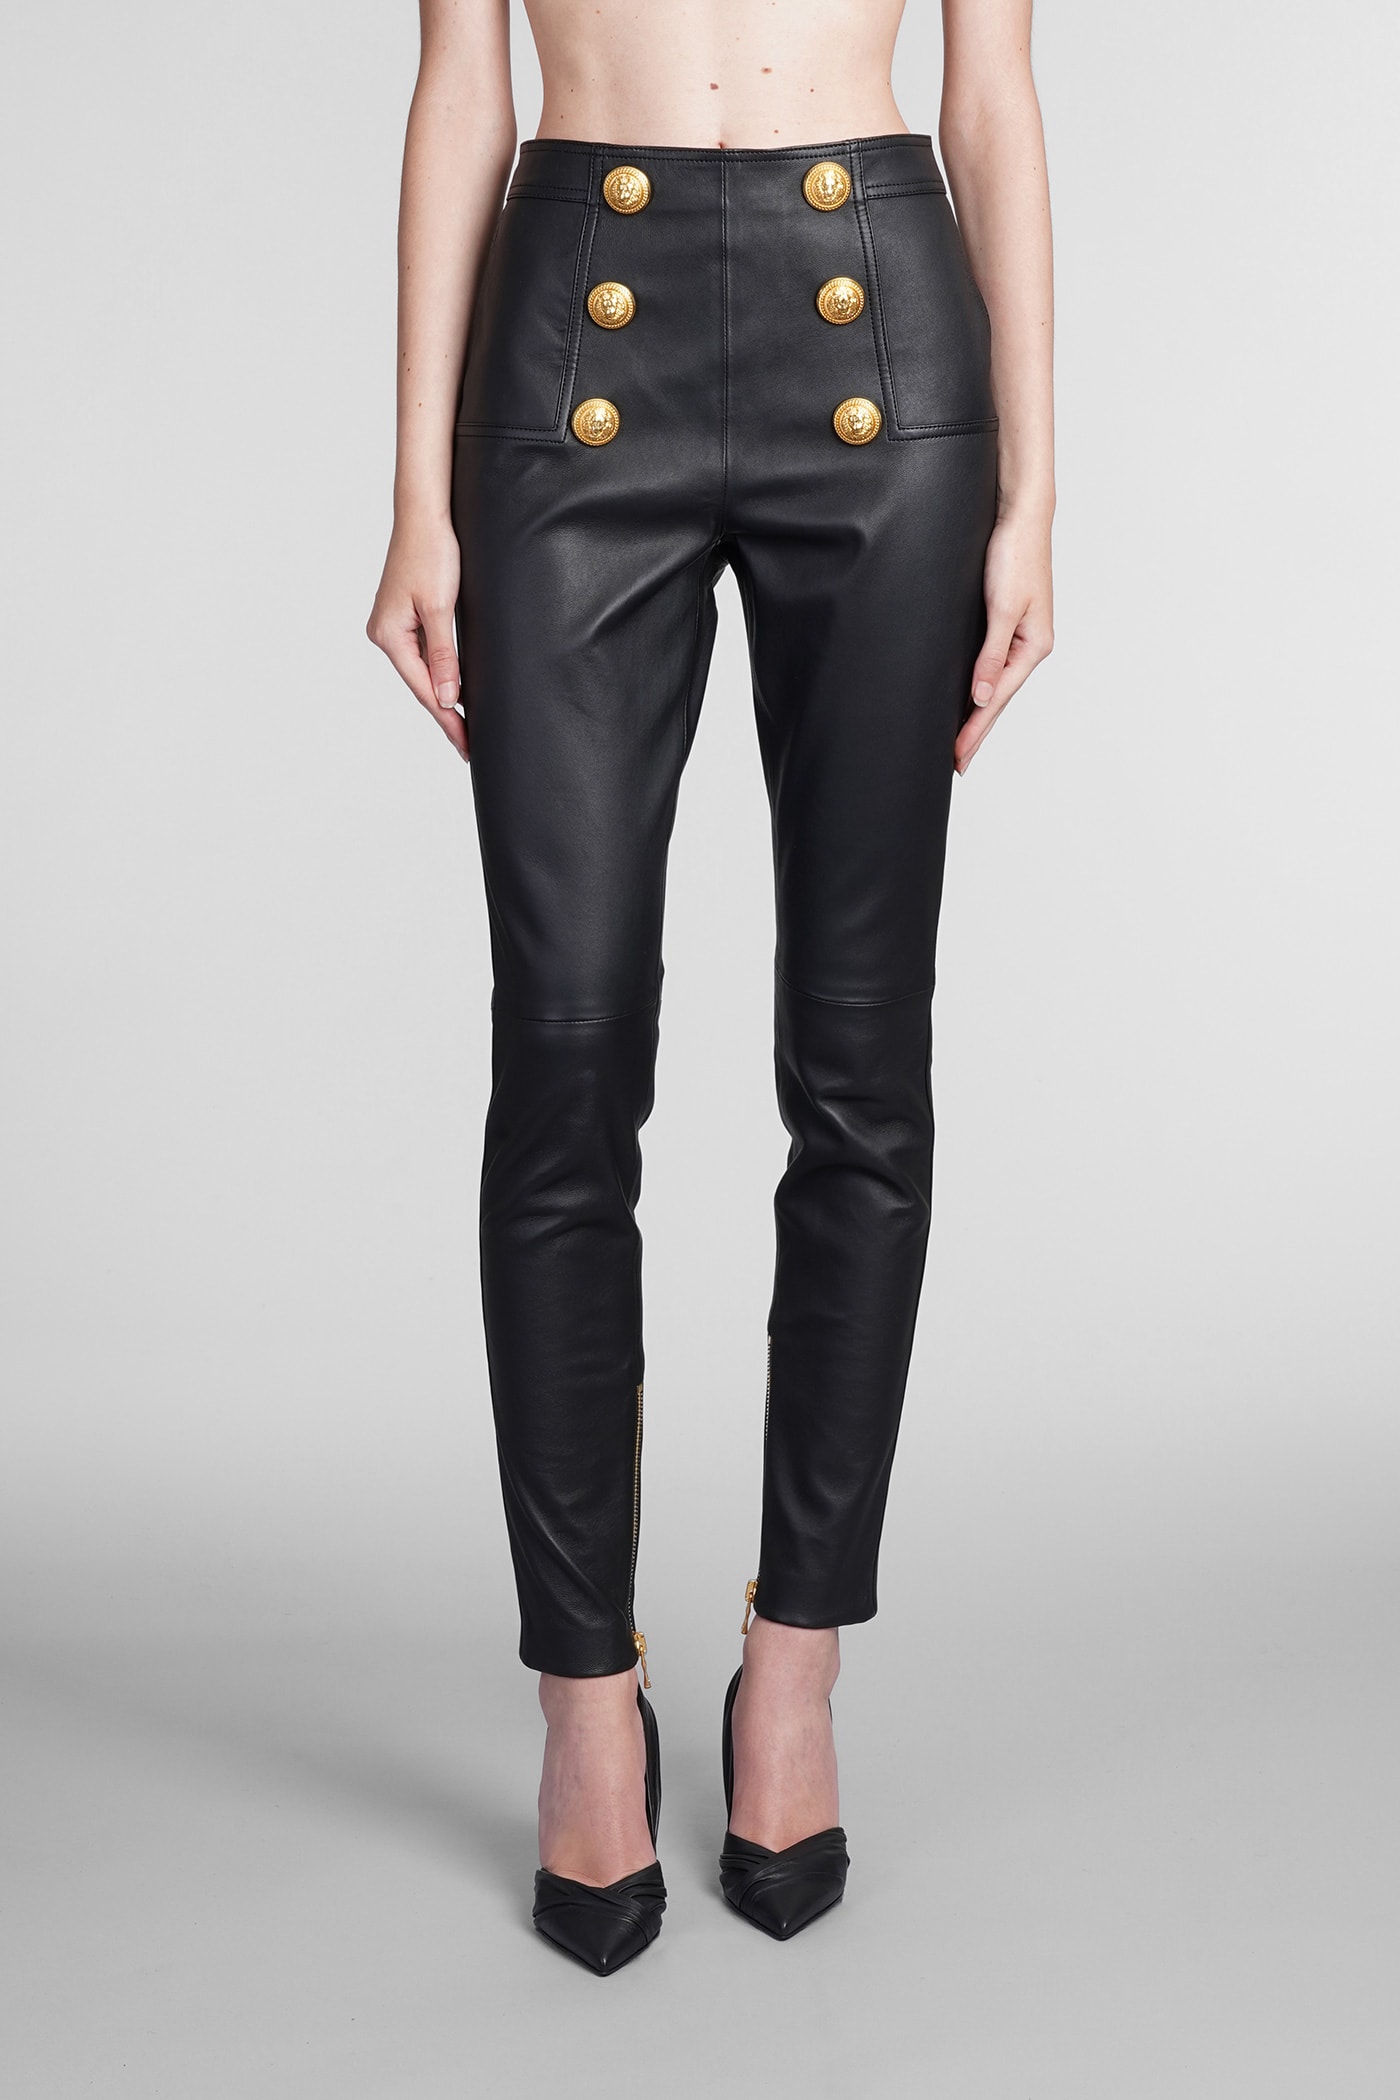 Balmain Pants In Black Leather